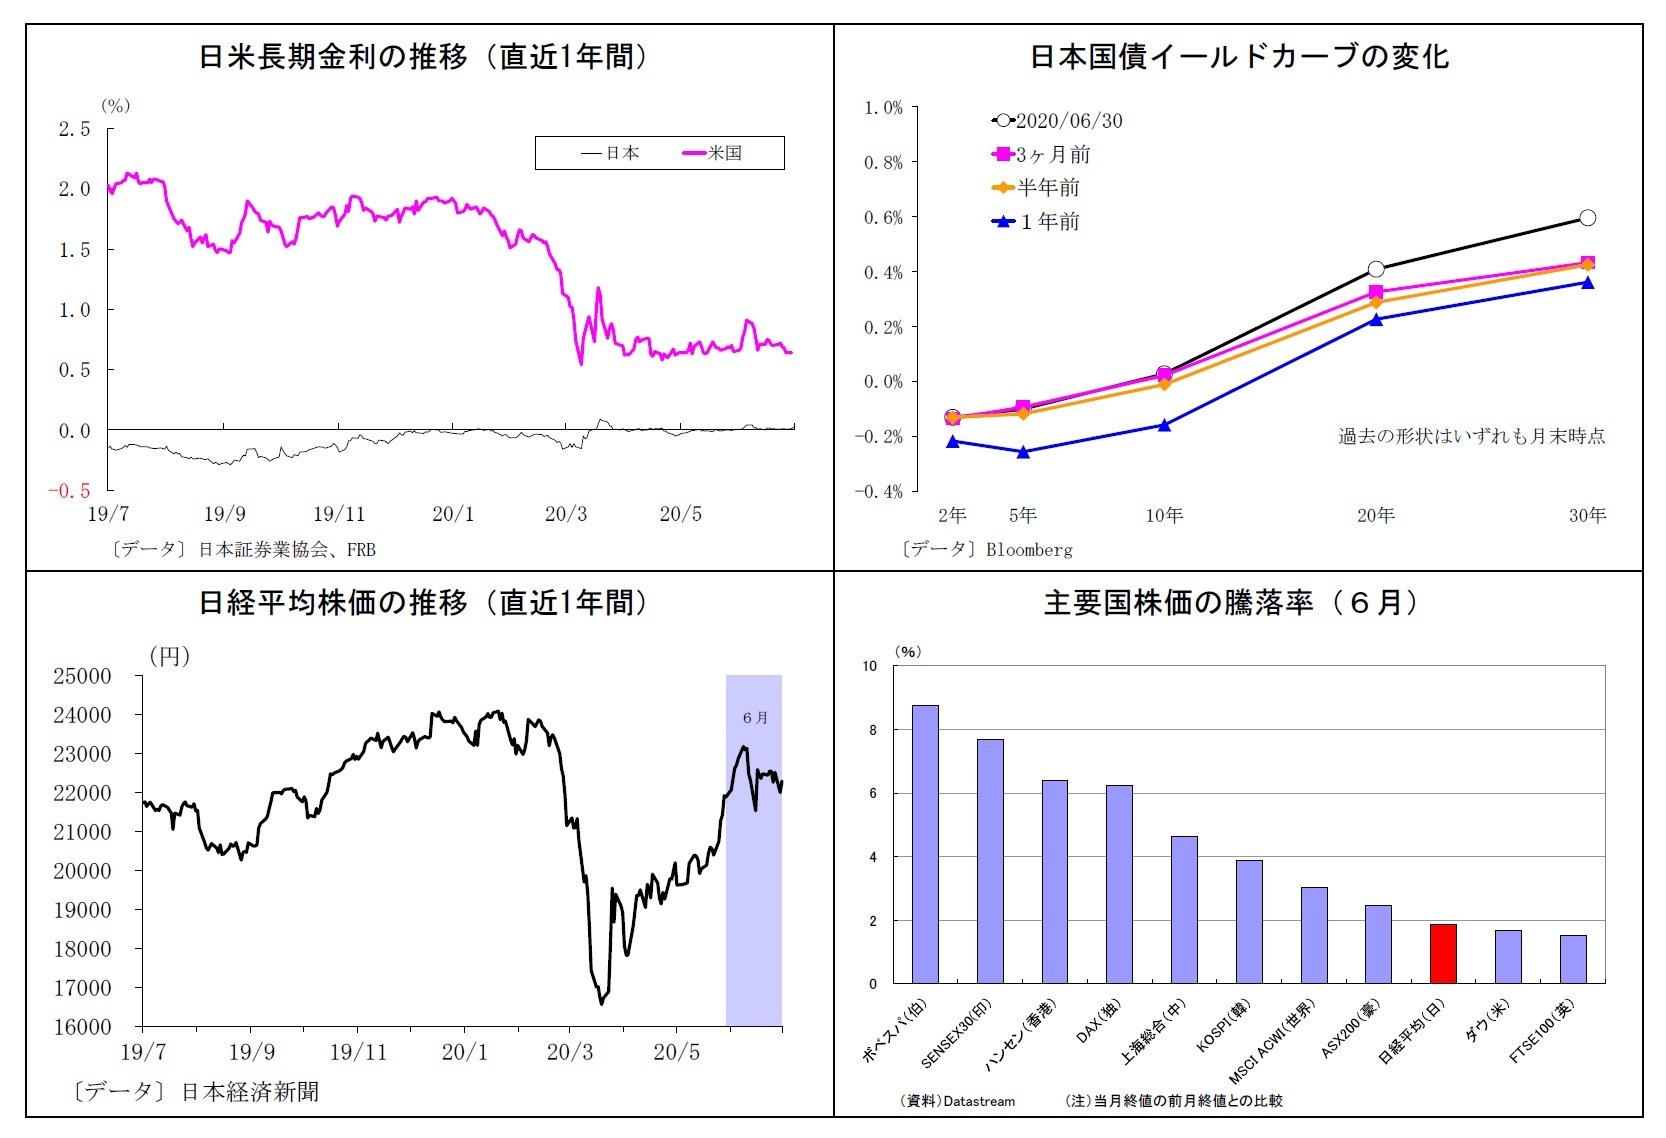 日米長期金利の推移（直近1年間）/日本国債イールドカーブの変化/日経平均株価の推移（直近1年間）/主要国株価の騰落率（６月）